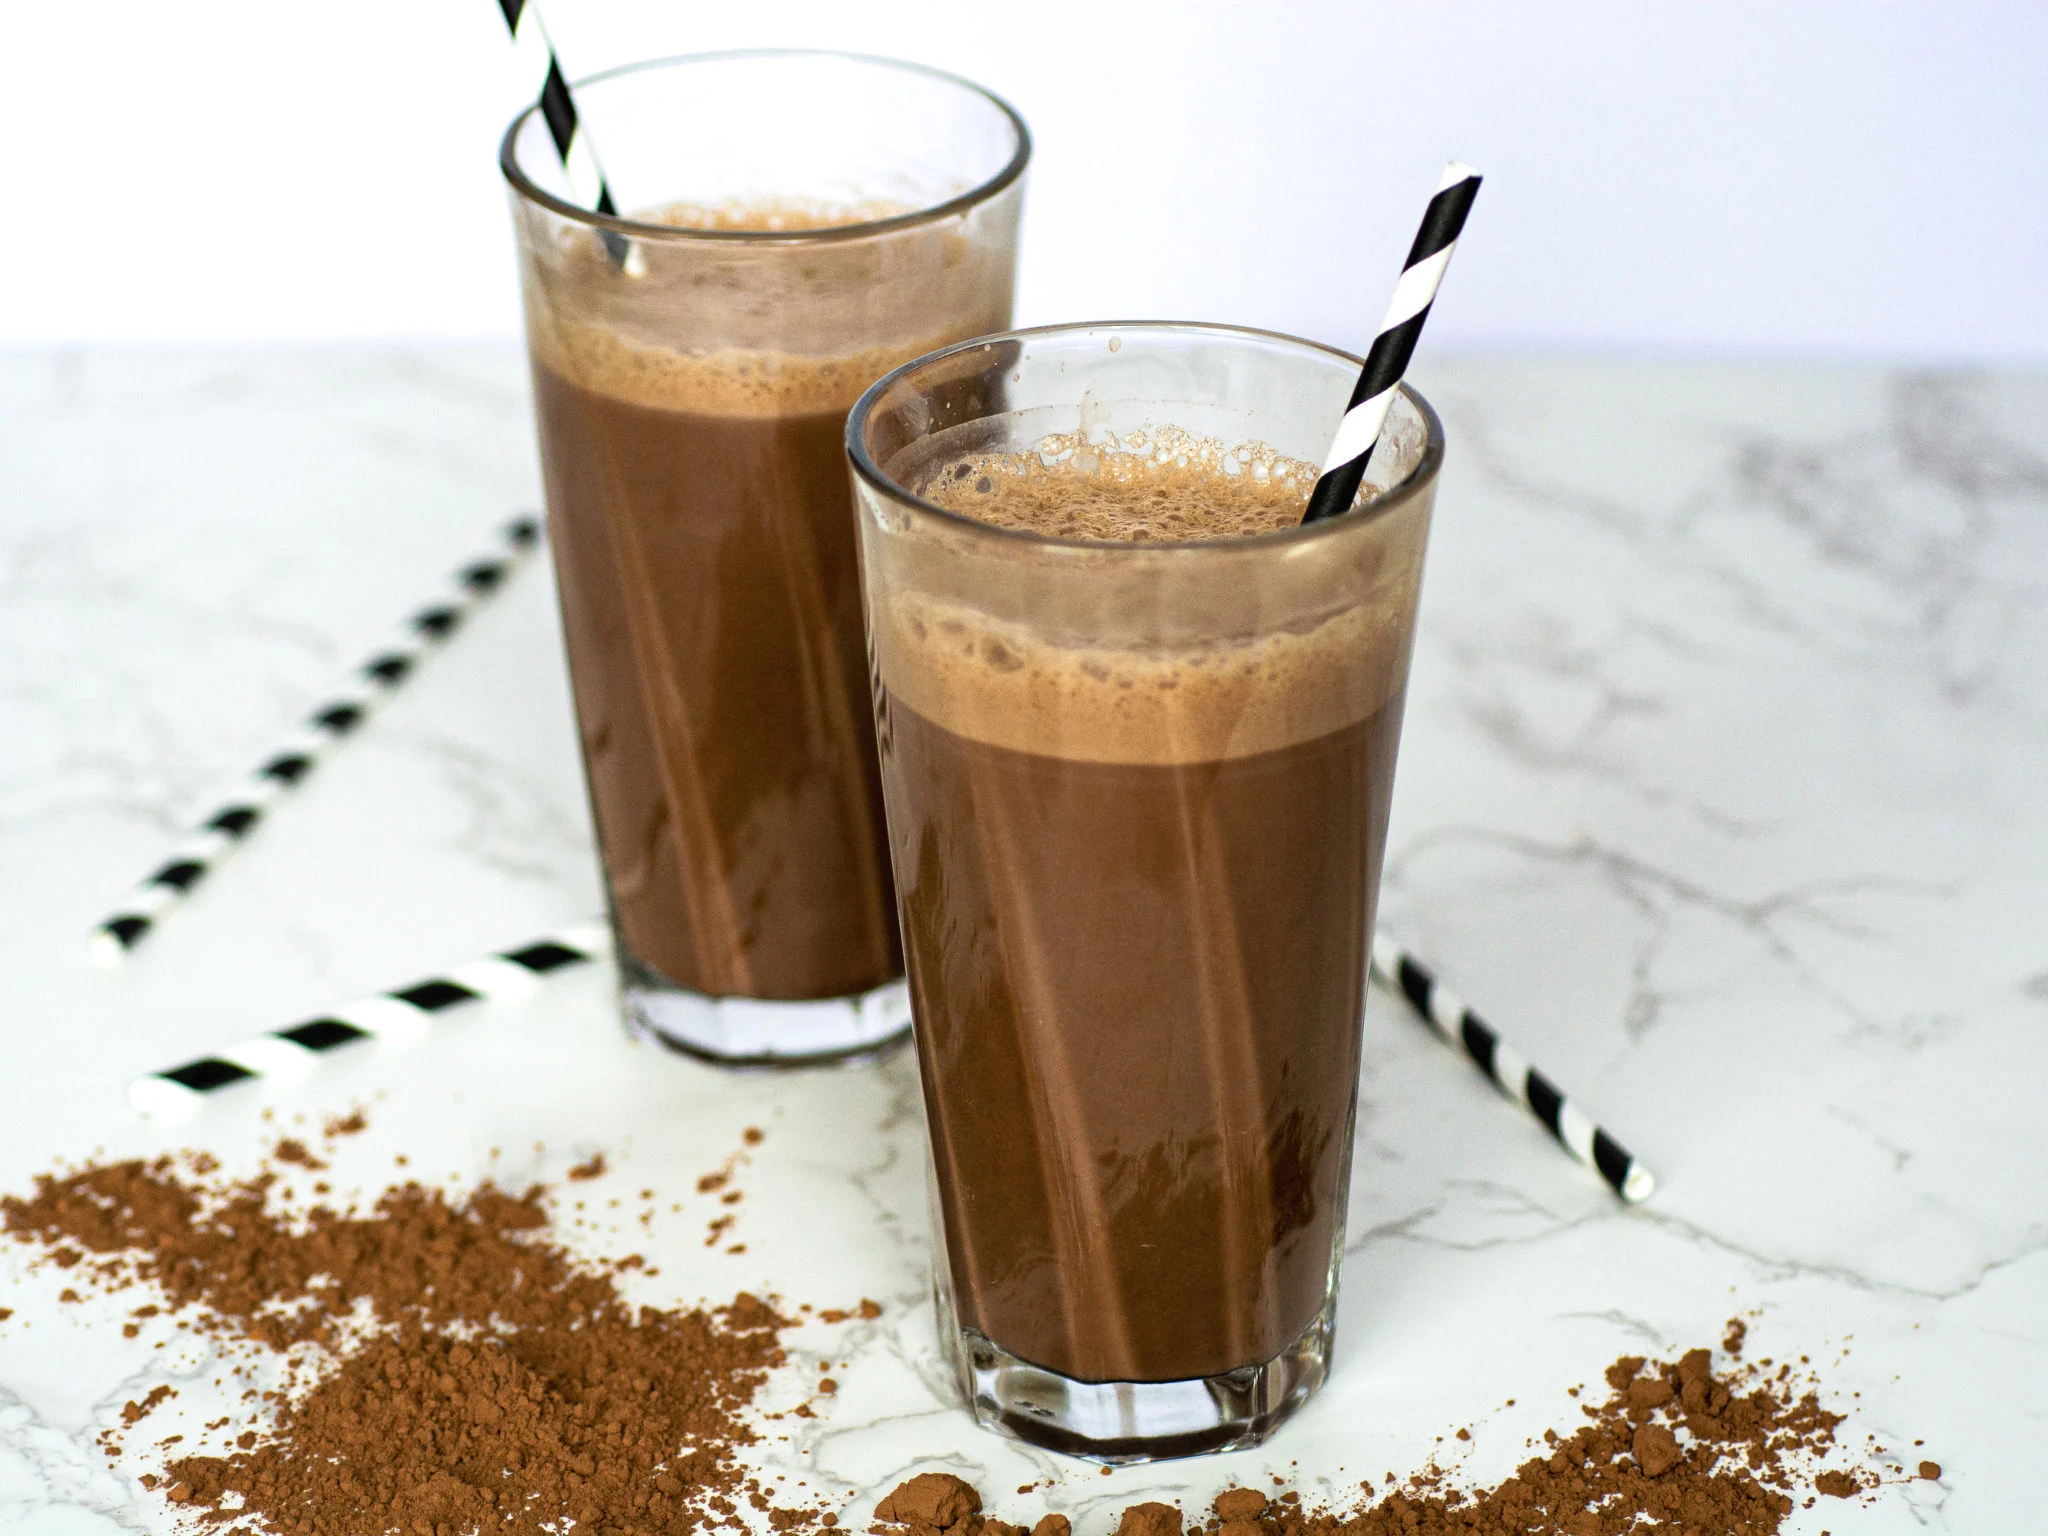 Keto Chocolate Milk - Almond Chocolate Drink Ketogenic